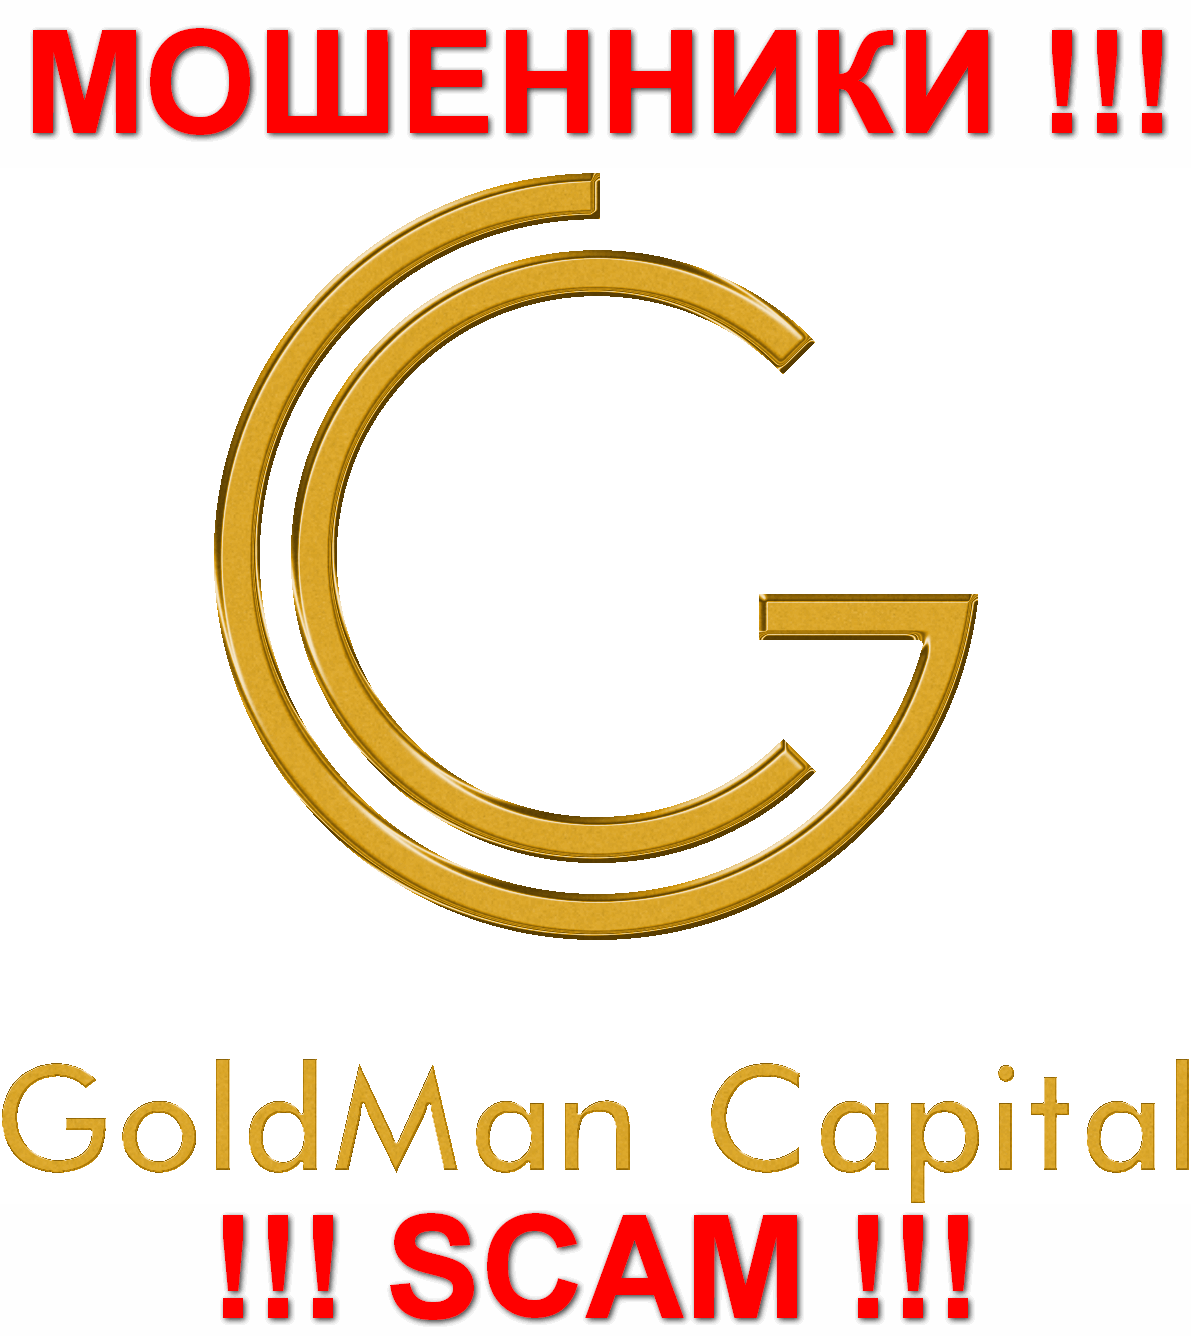 GoldmanCapital - ЛОХОТОРОНЩИКИ !!! СКАМ !!!